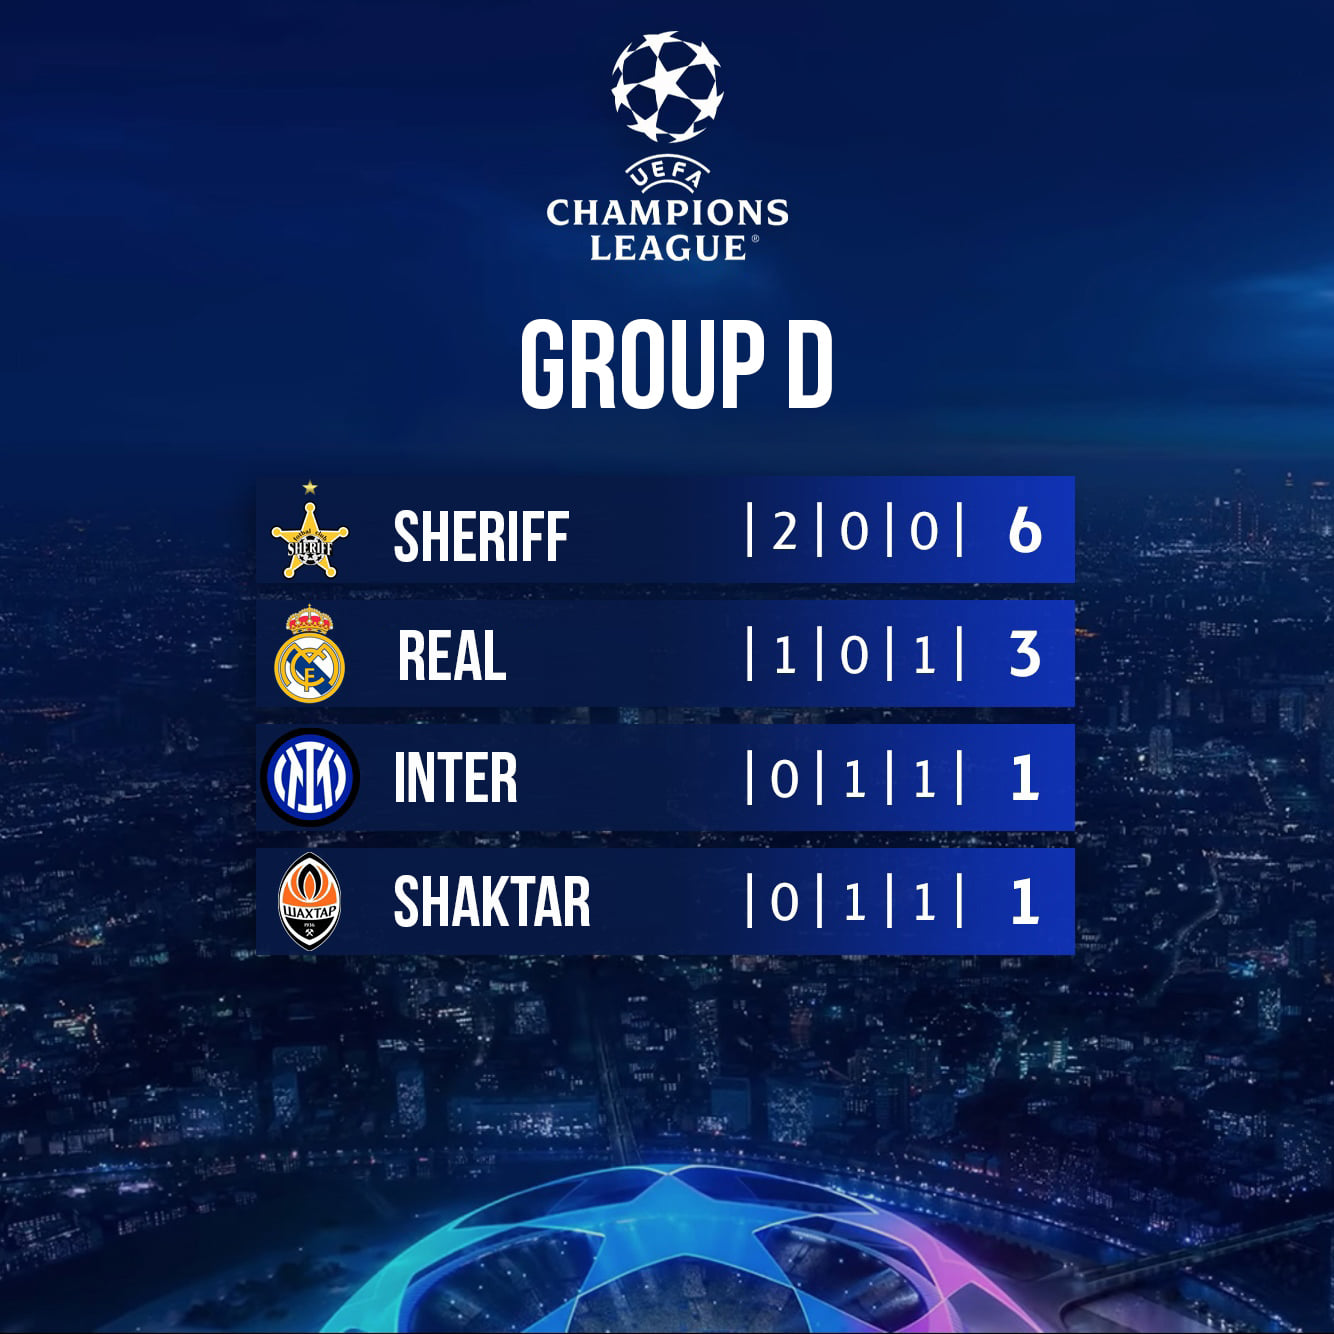 Champions League Group D standings